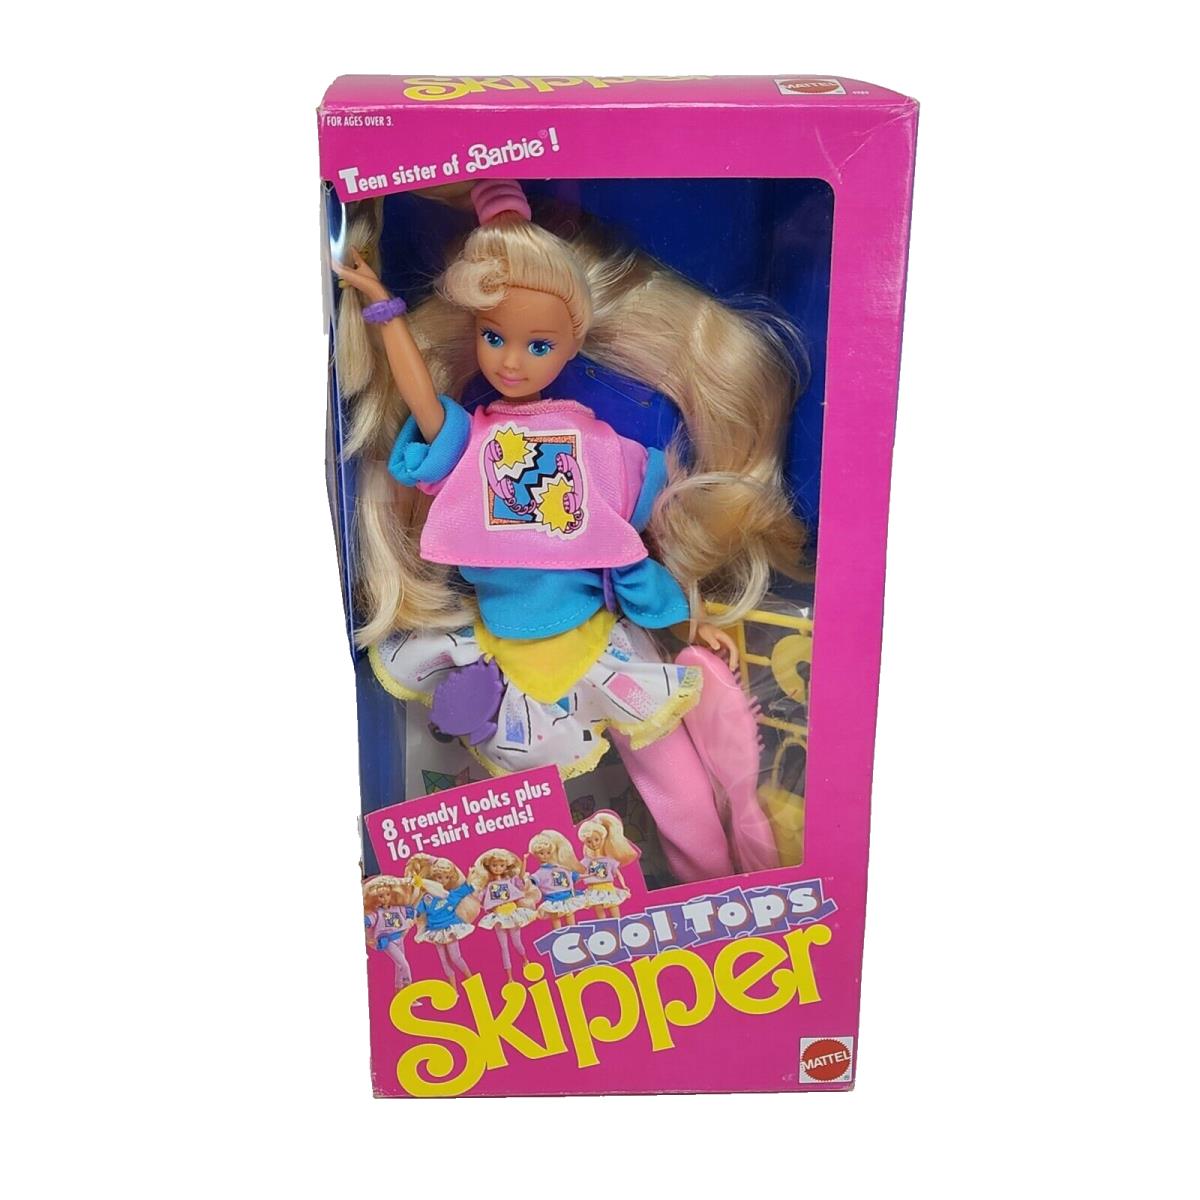 Vintage 1989 Cool Tops Skipper Barbie Doll 4989 Mattel IN Box